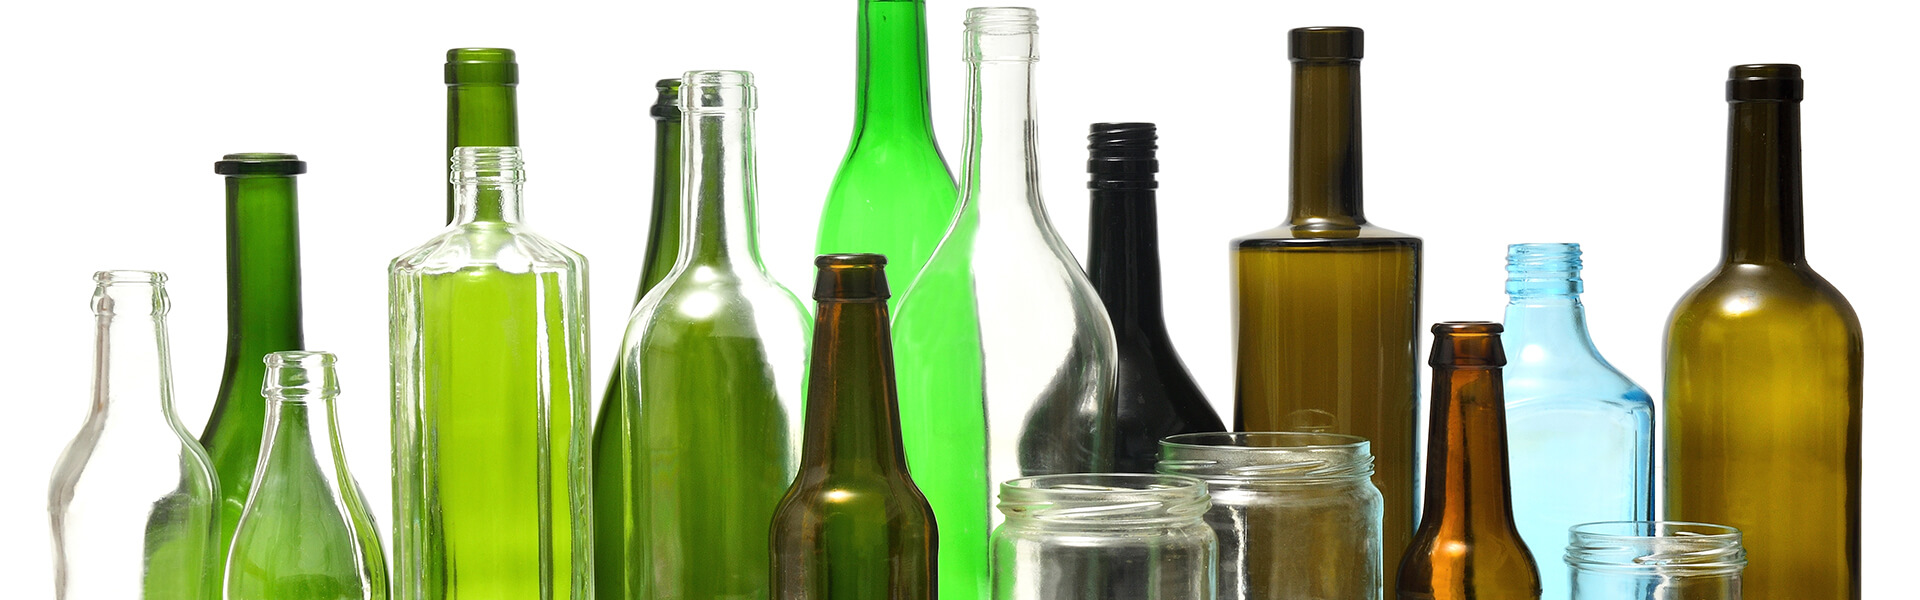 Glass Bottles For Rumpke Glass Recycling 1